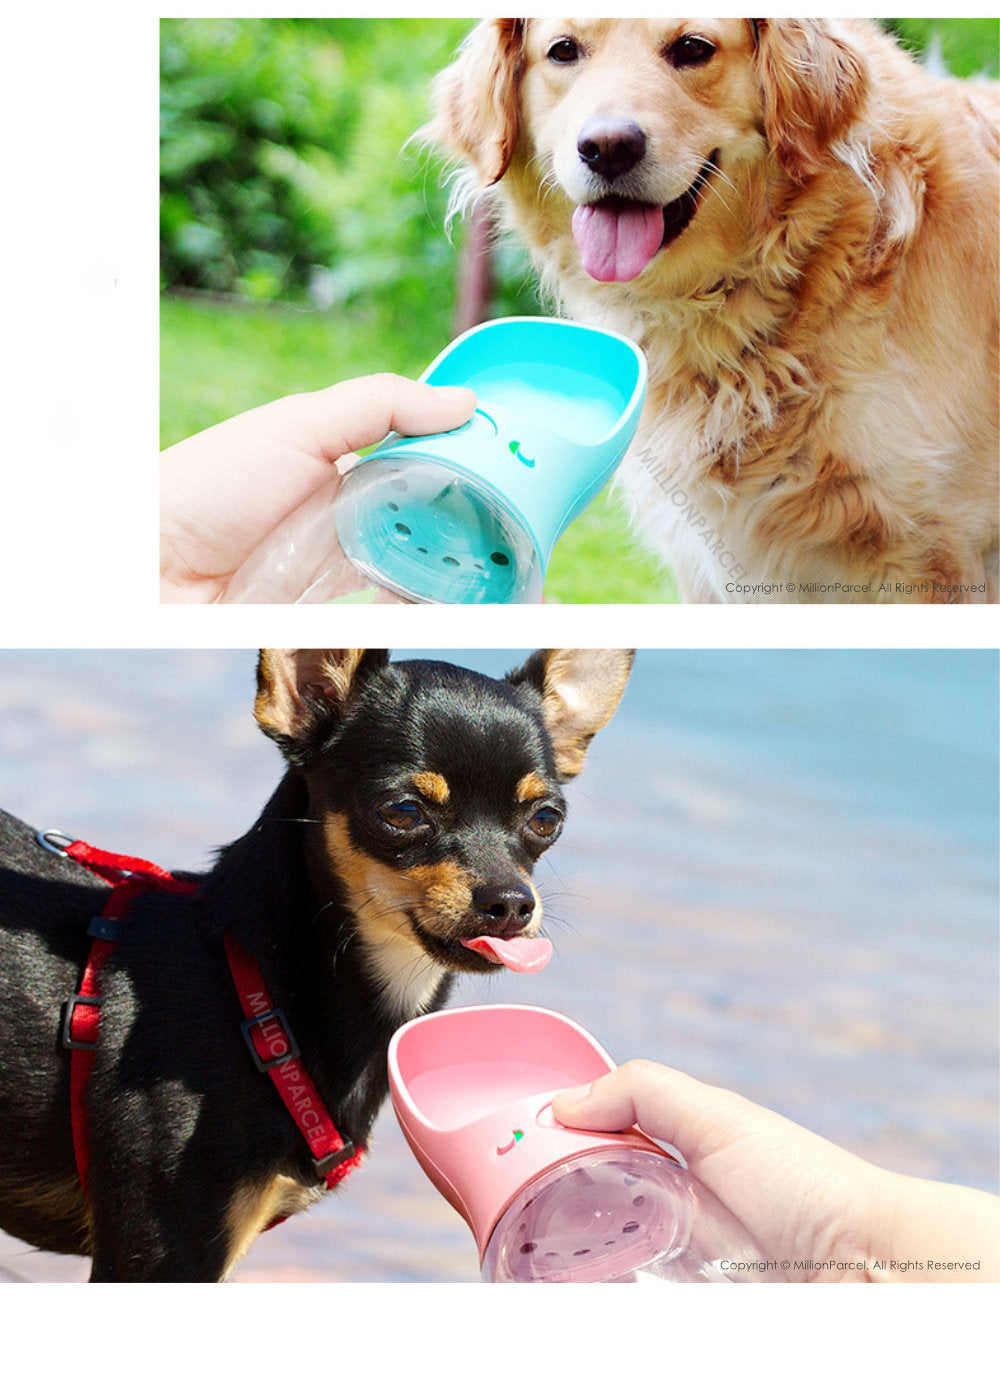 Pet Water Cup